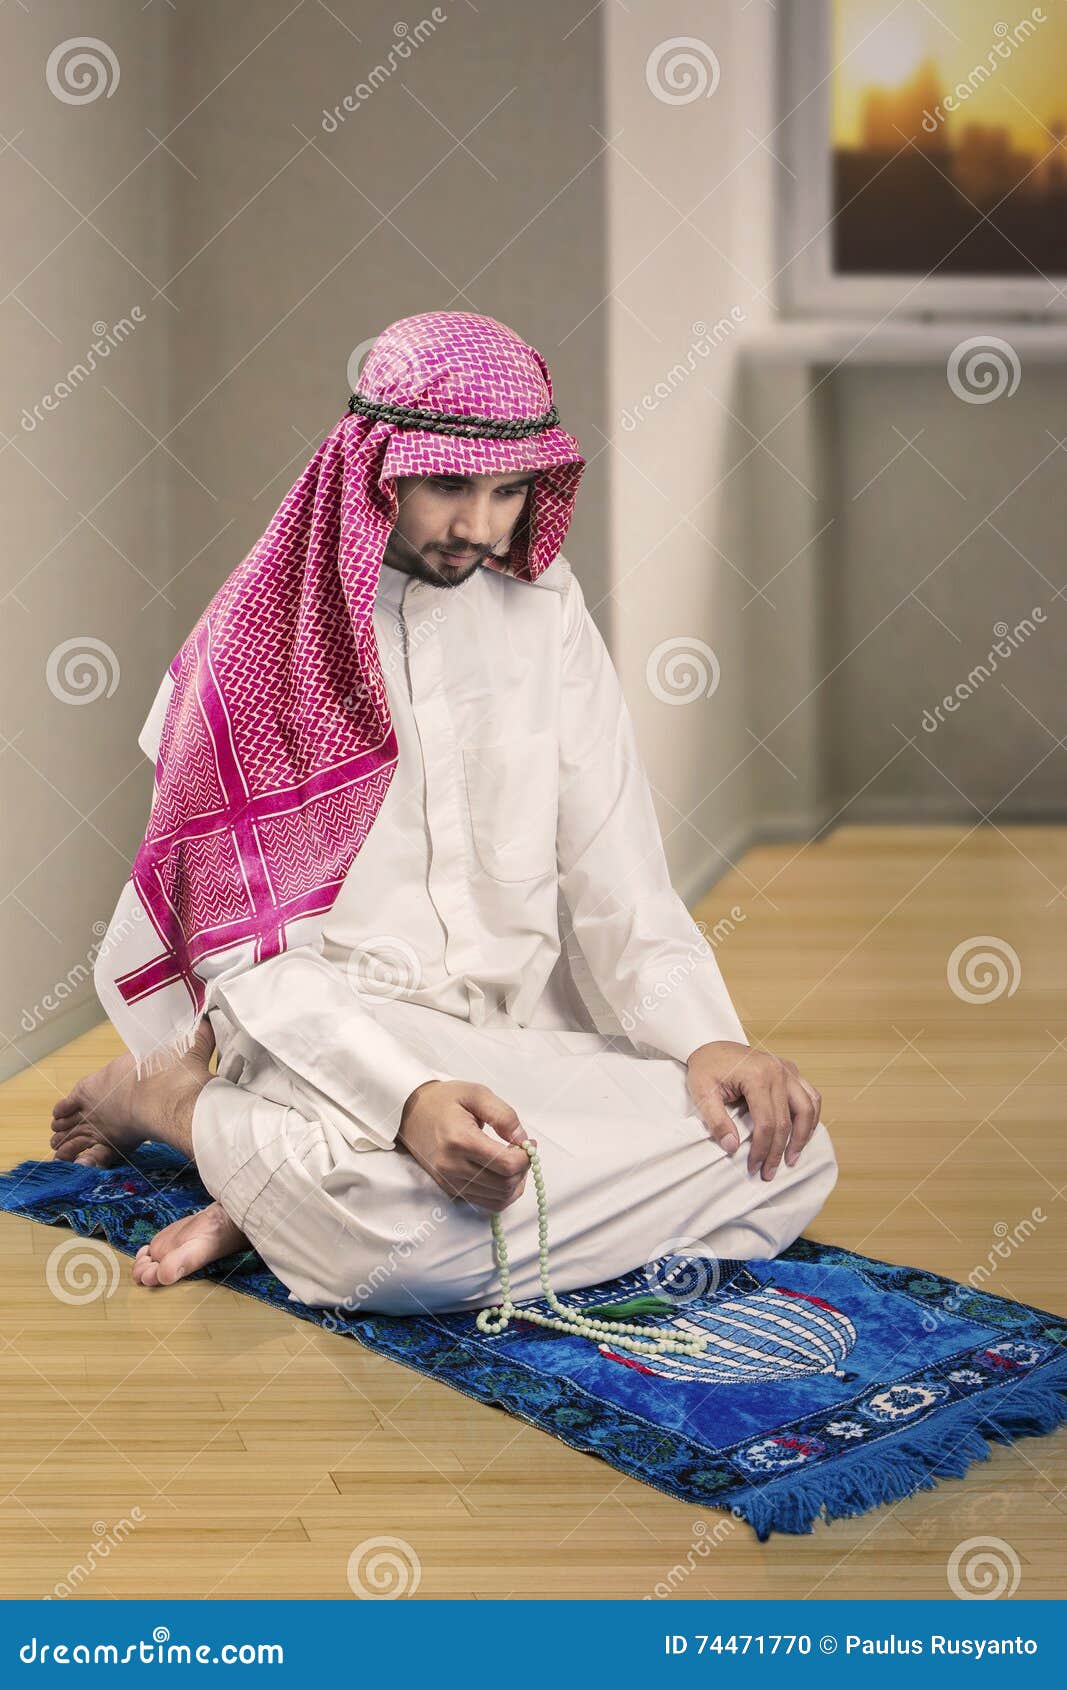 arabian person doing dhikr